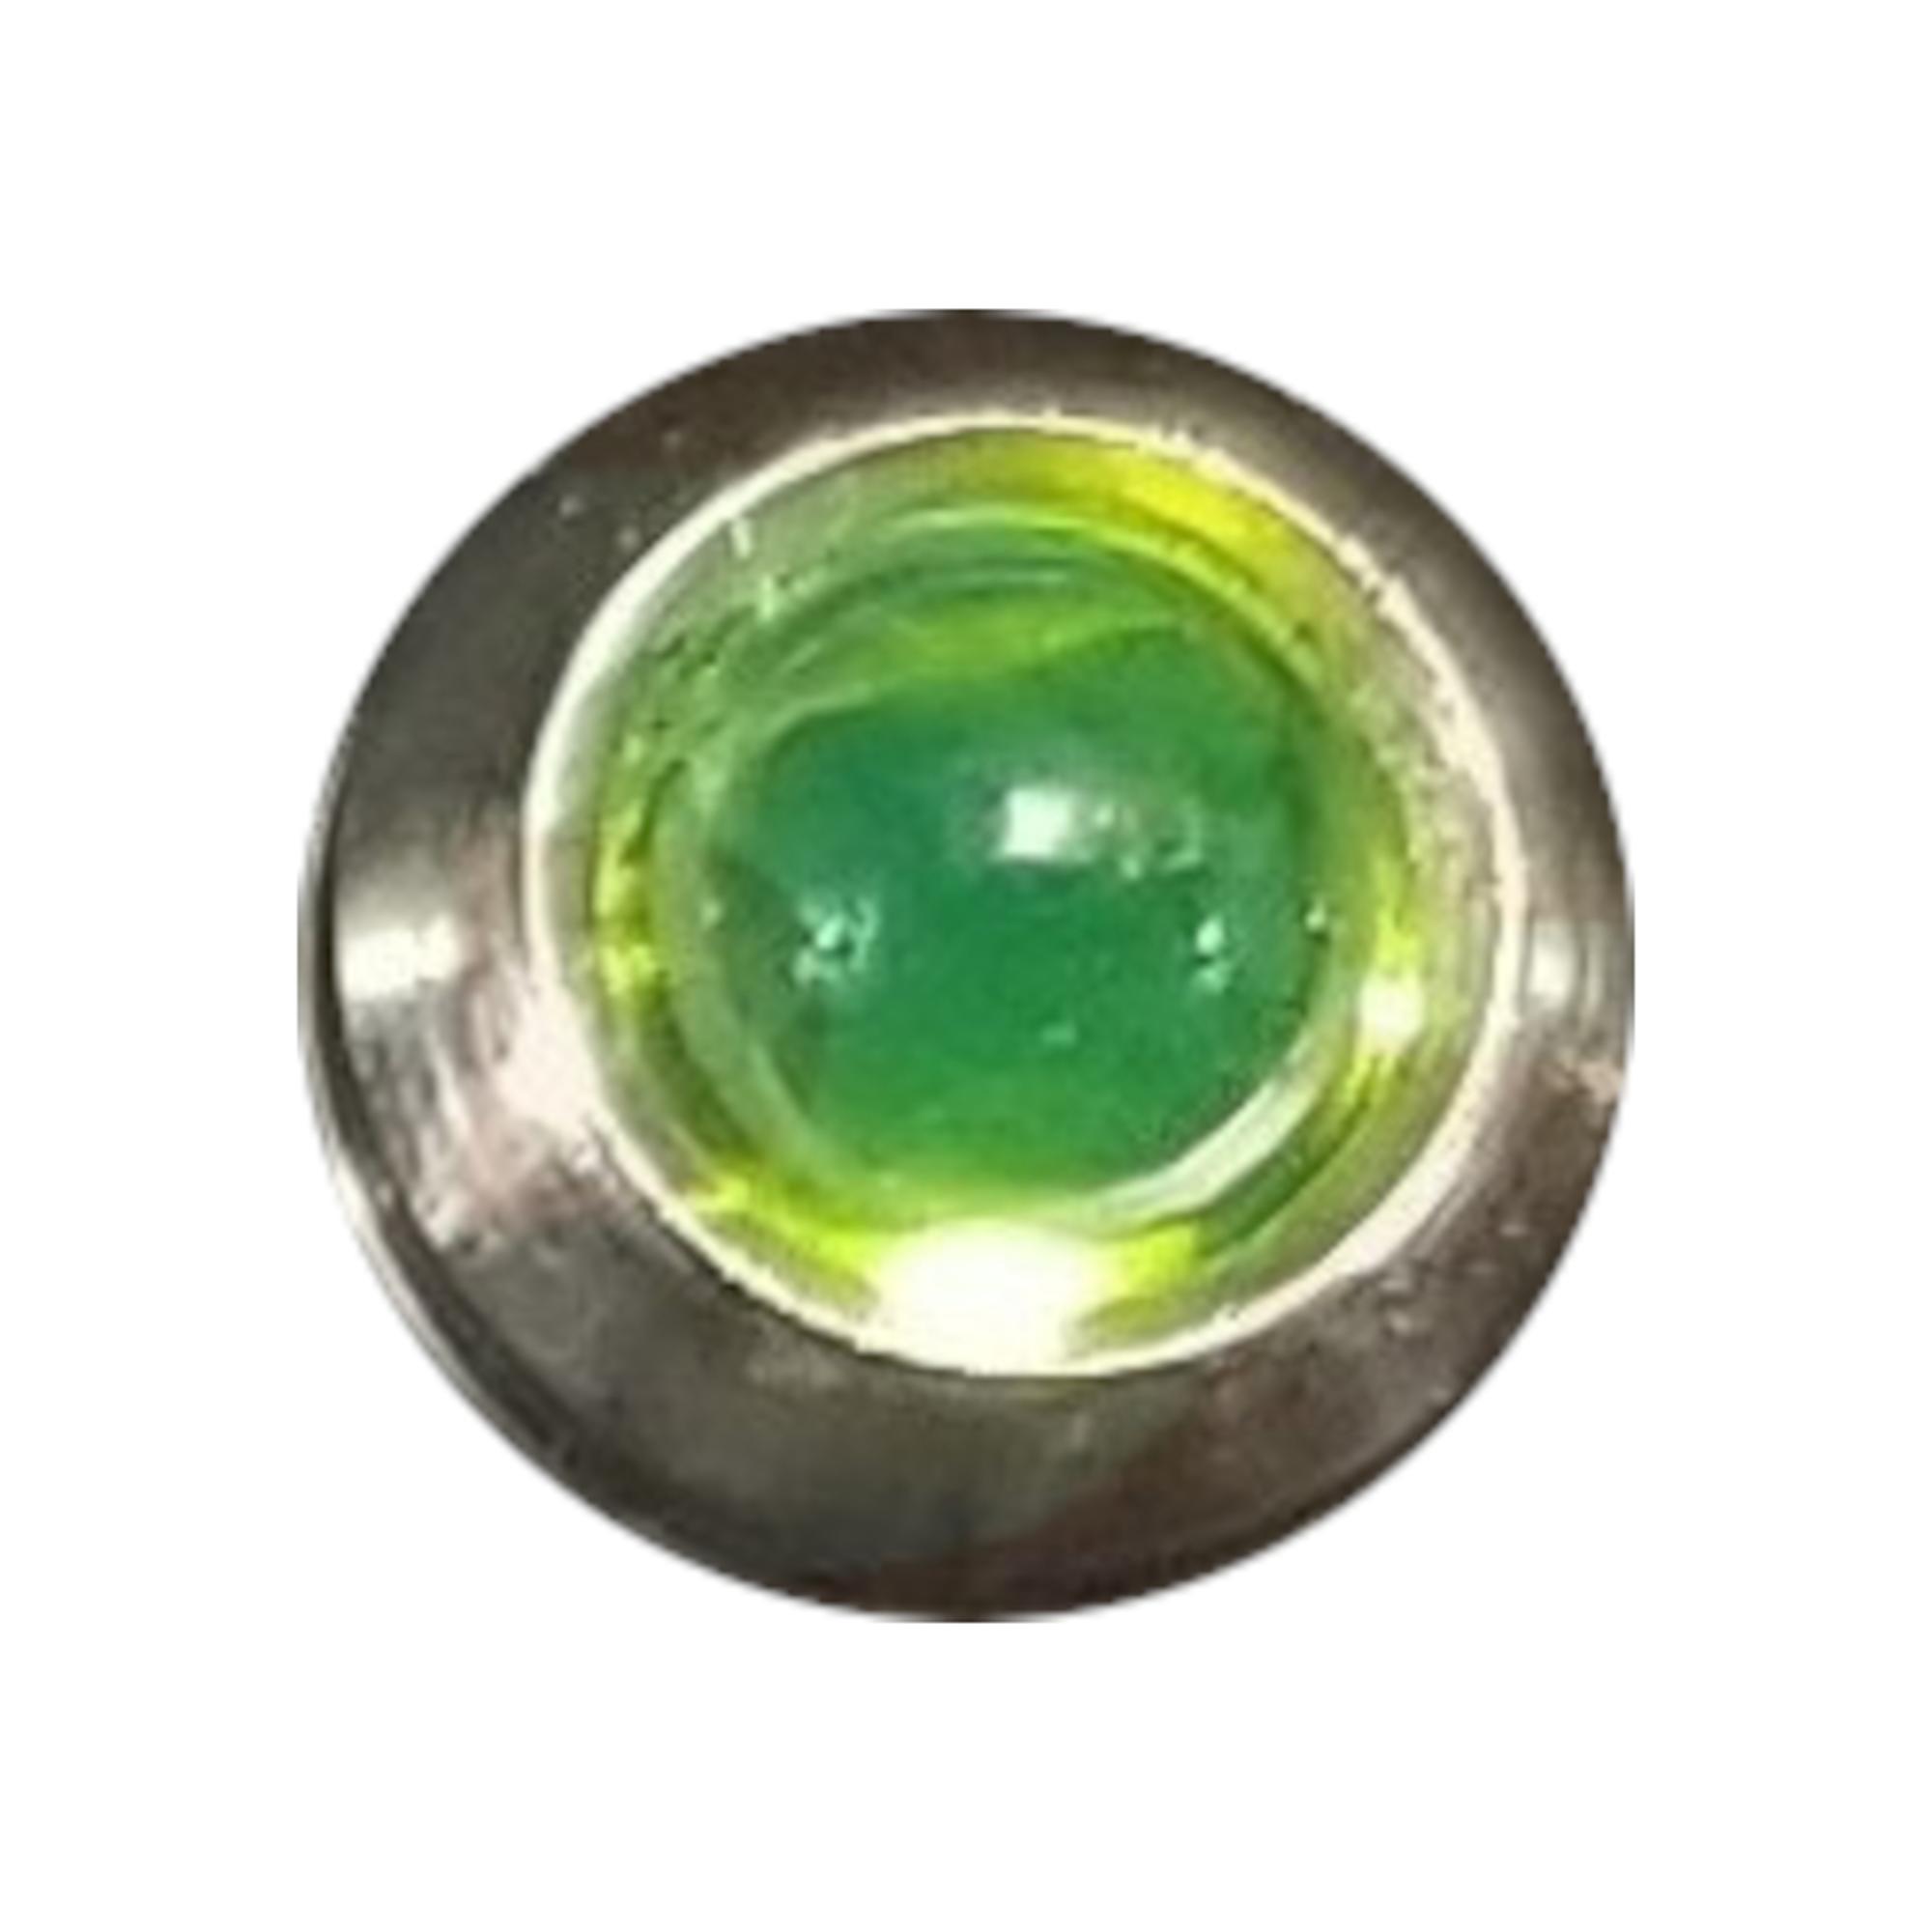 SIMP 5mm Monoeye / Scope (Green)